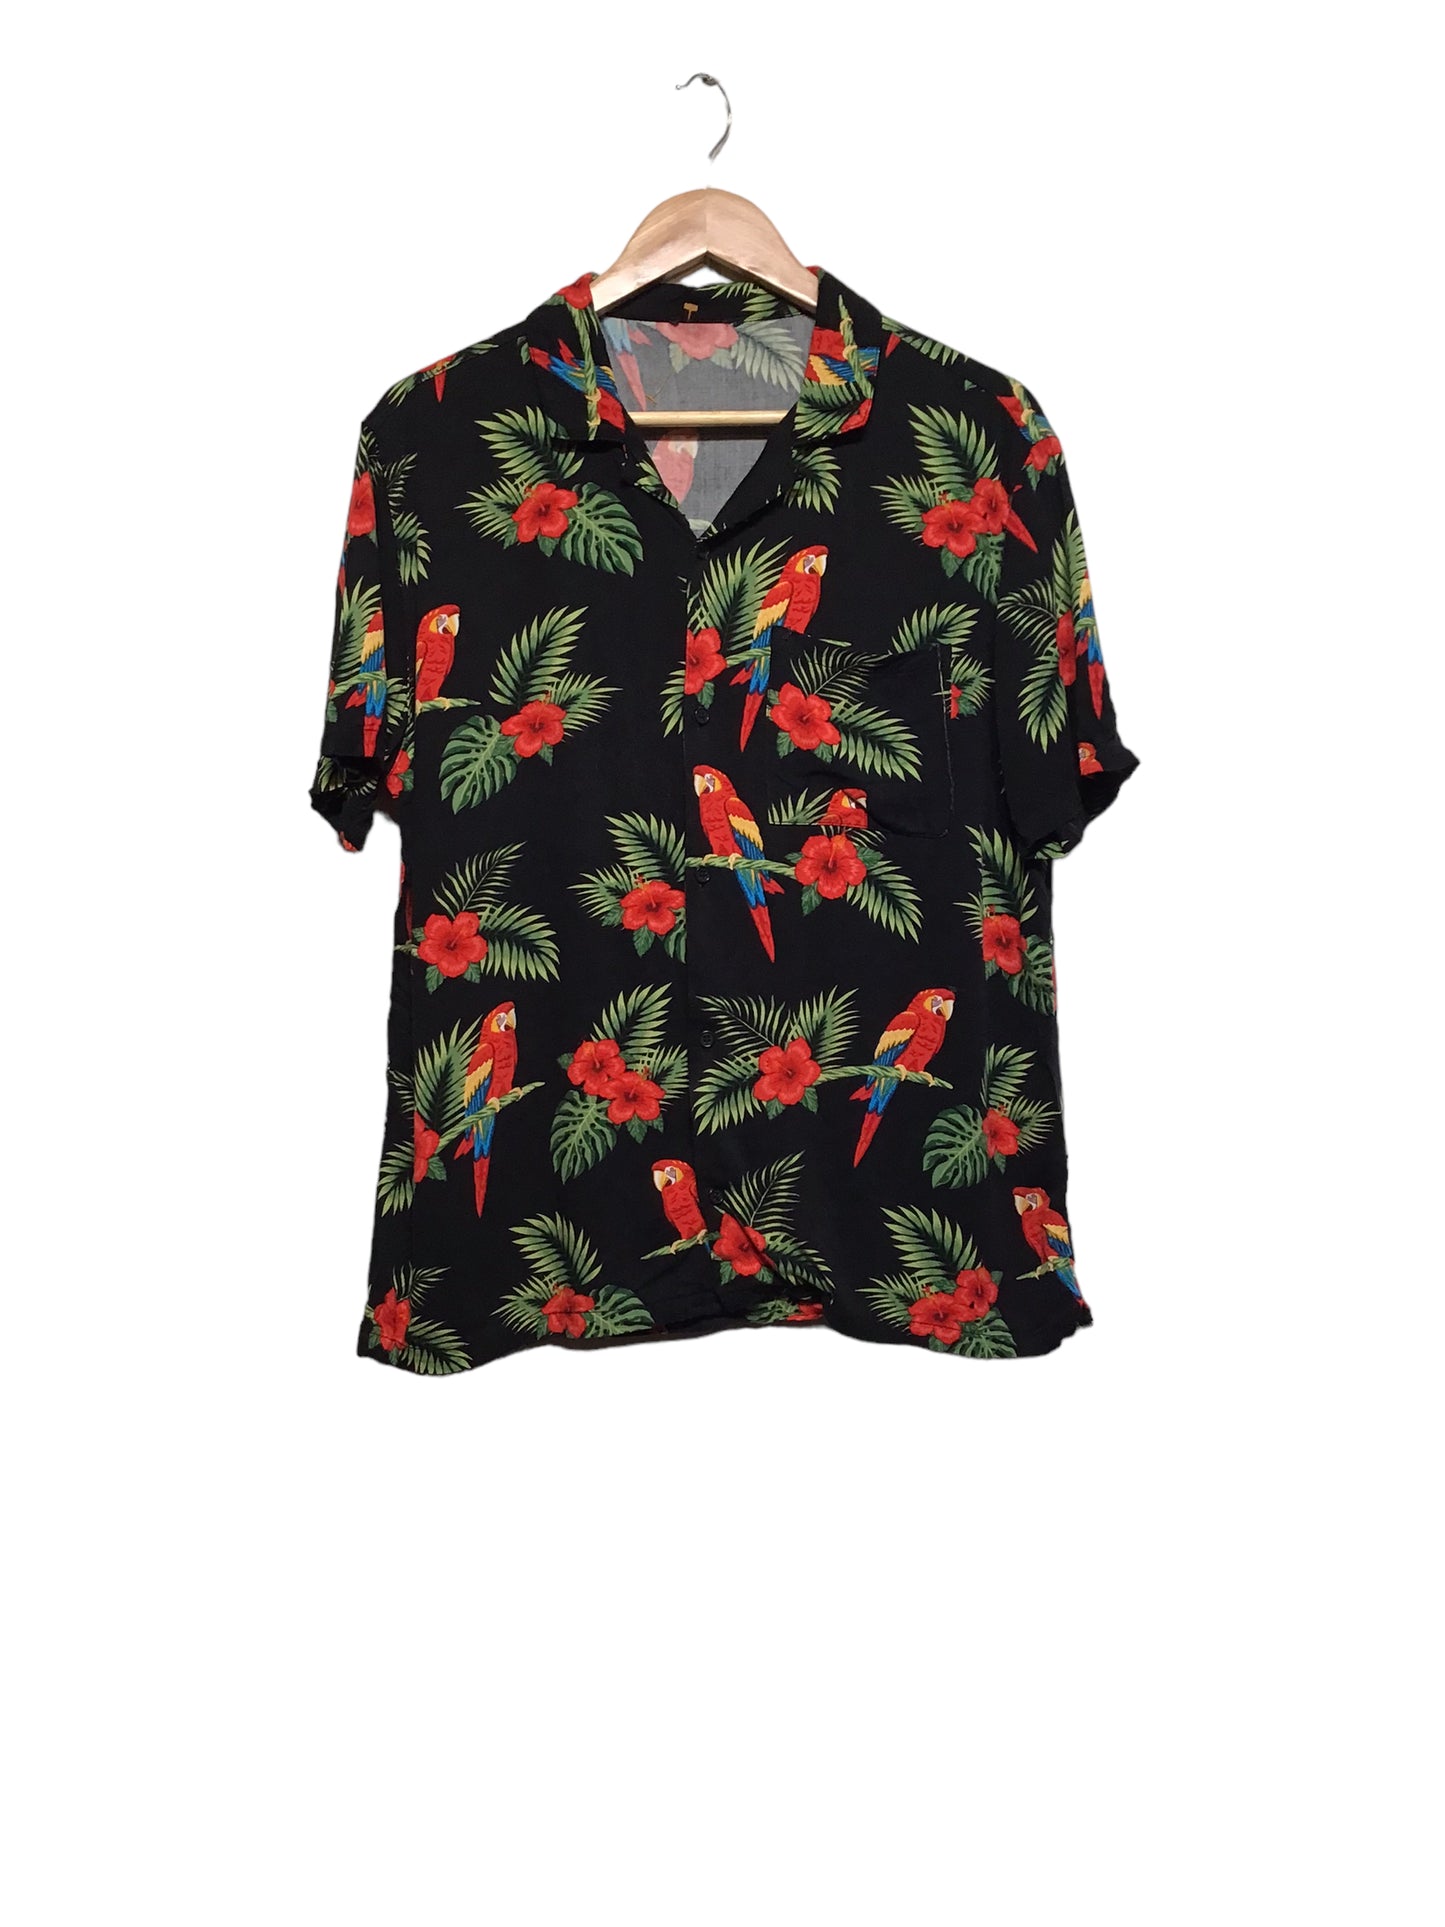 Parrot Hawaiian Shirt (Size S)